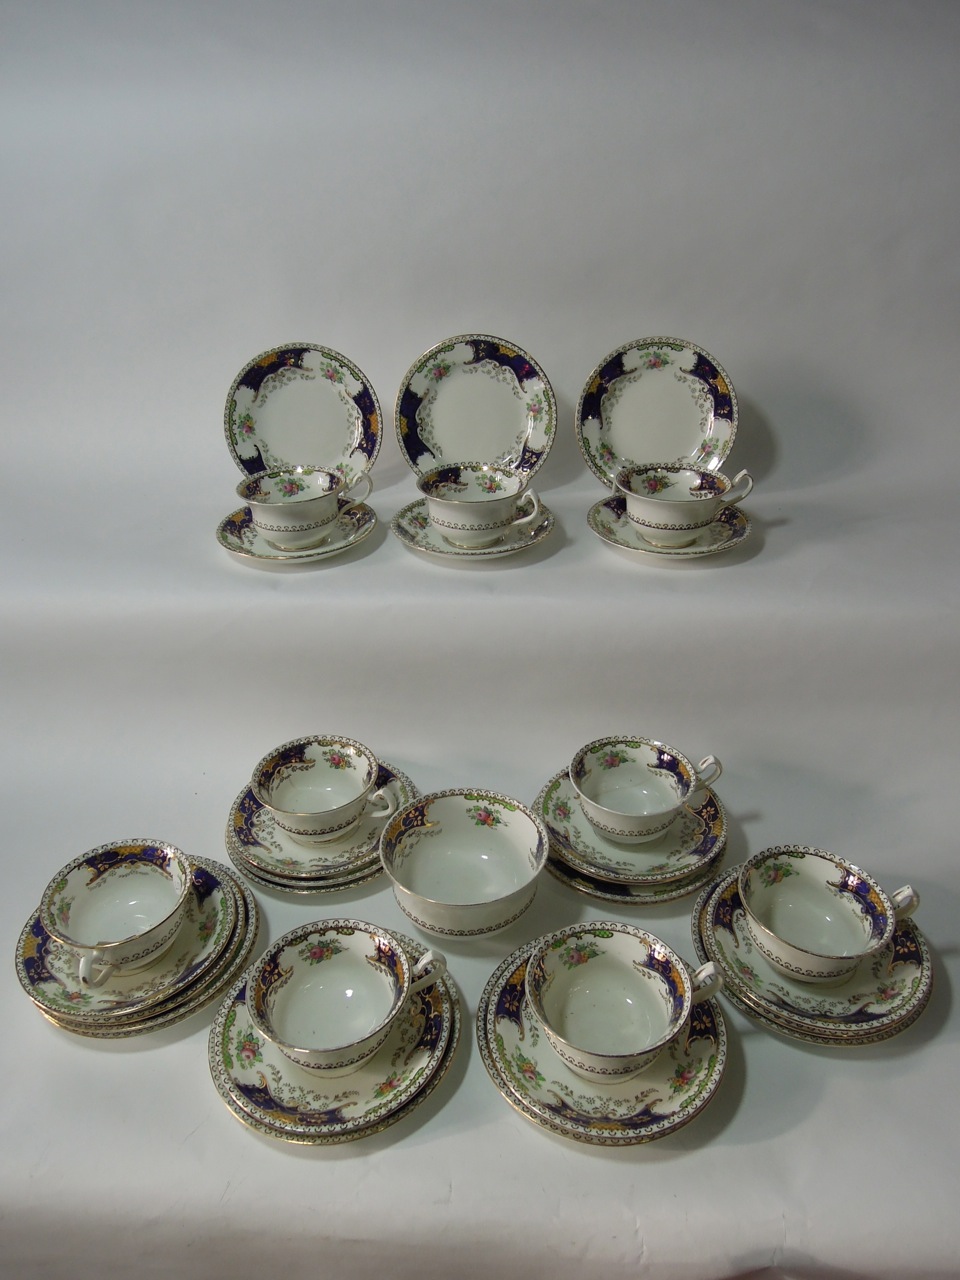 A Fenton "Kenmare" pattern tea set including nine trios and a sugar bowl